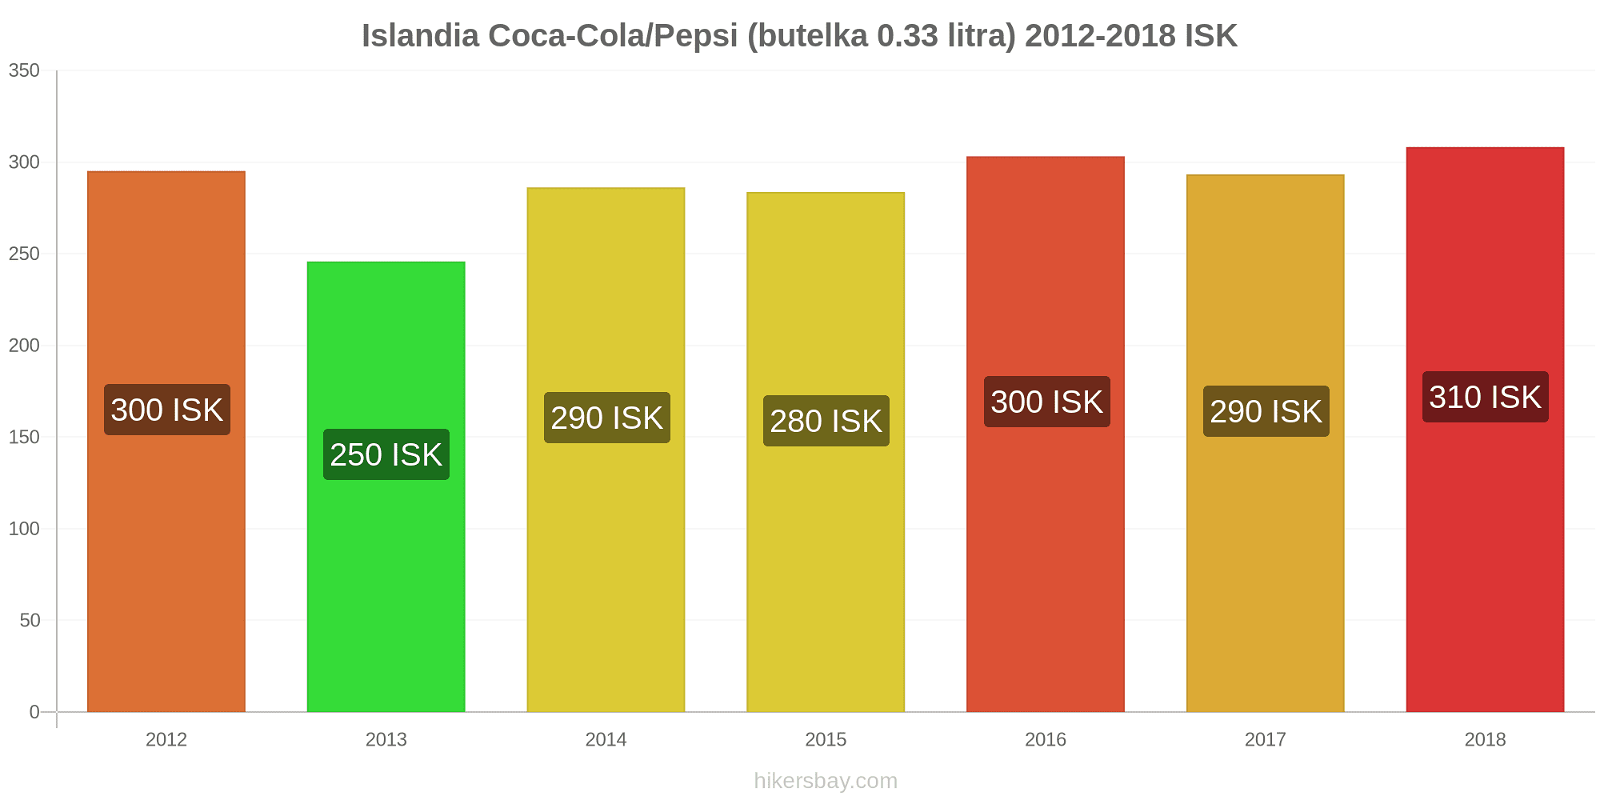 Islandia zmiany cen Coca-Cola/Pepsi (butelka 0.33 litra) hikersbay.com